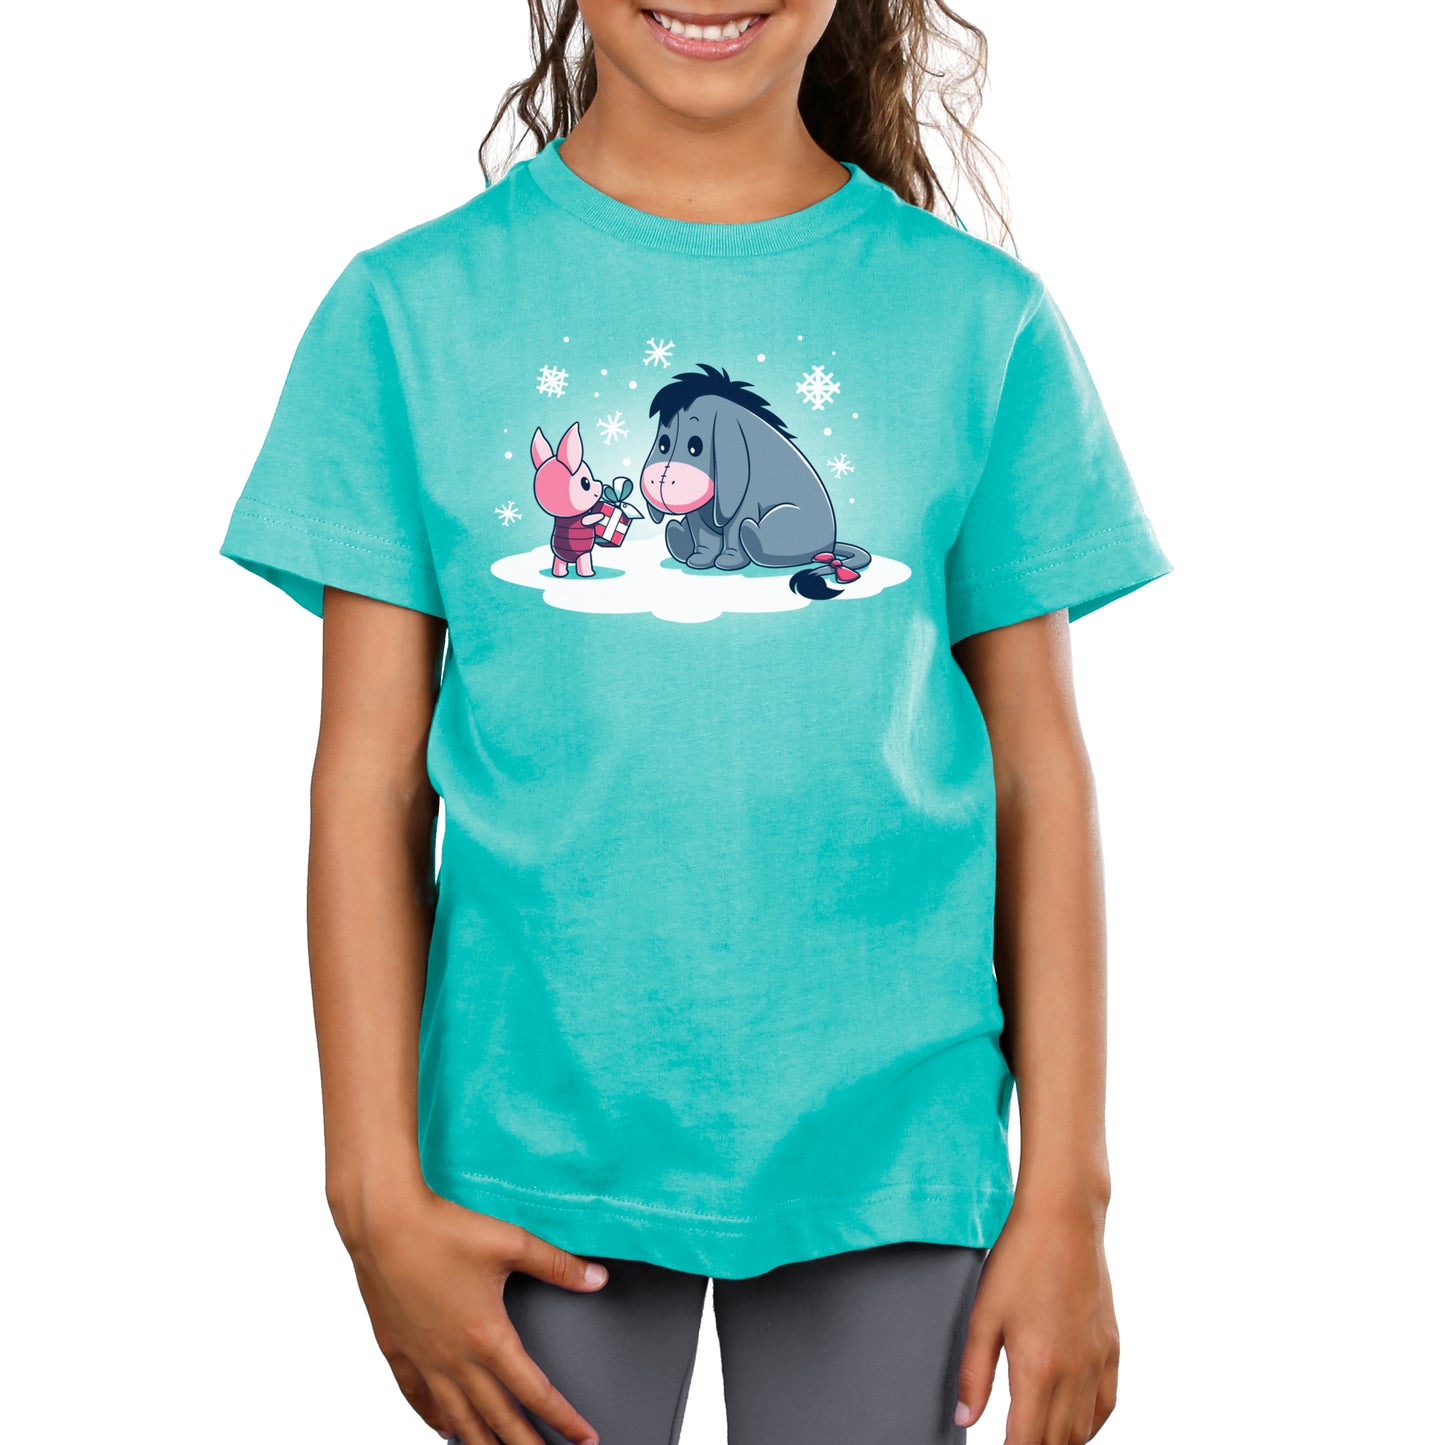 Disney kids t-shirt featuring Piglet's Gift For Eeyore, made of ringspun cotton.